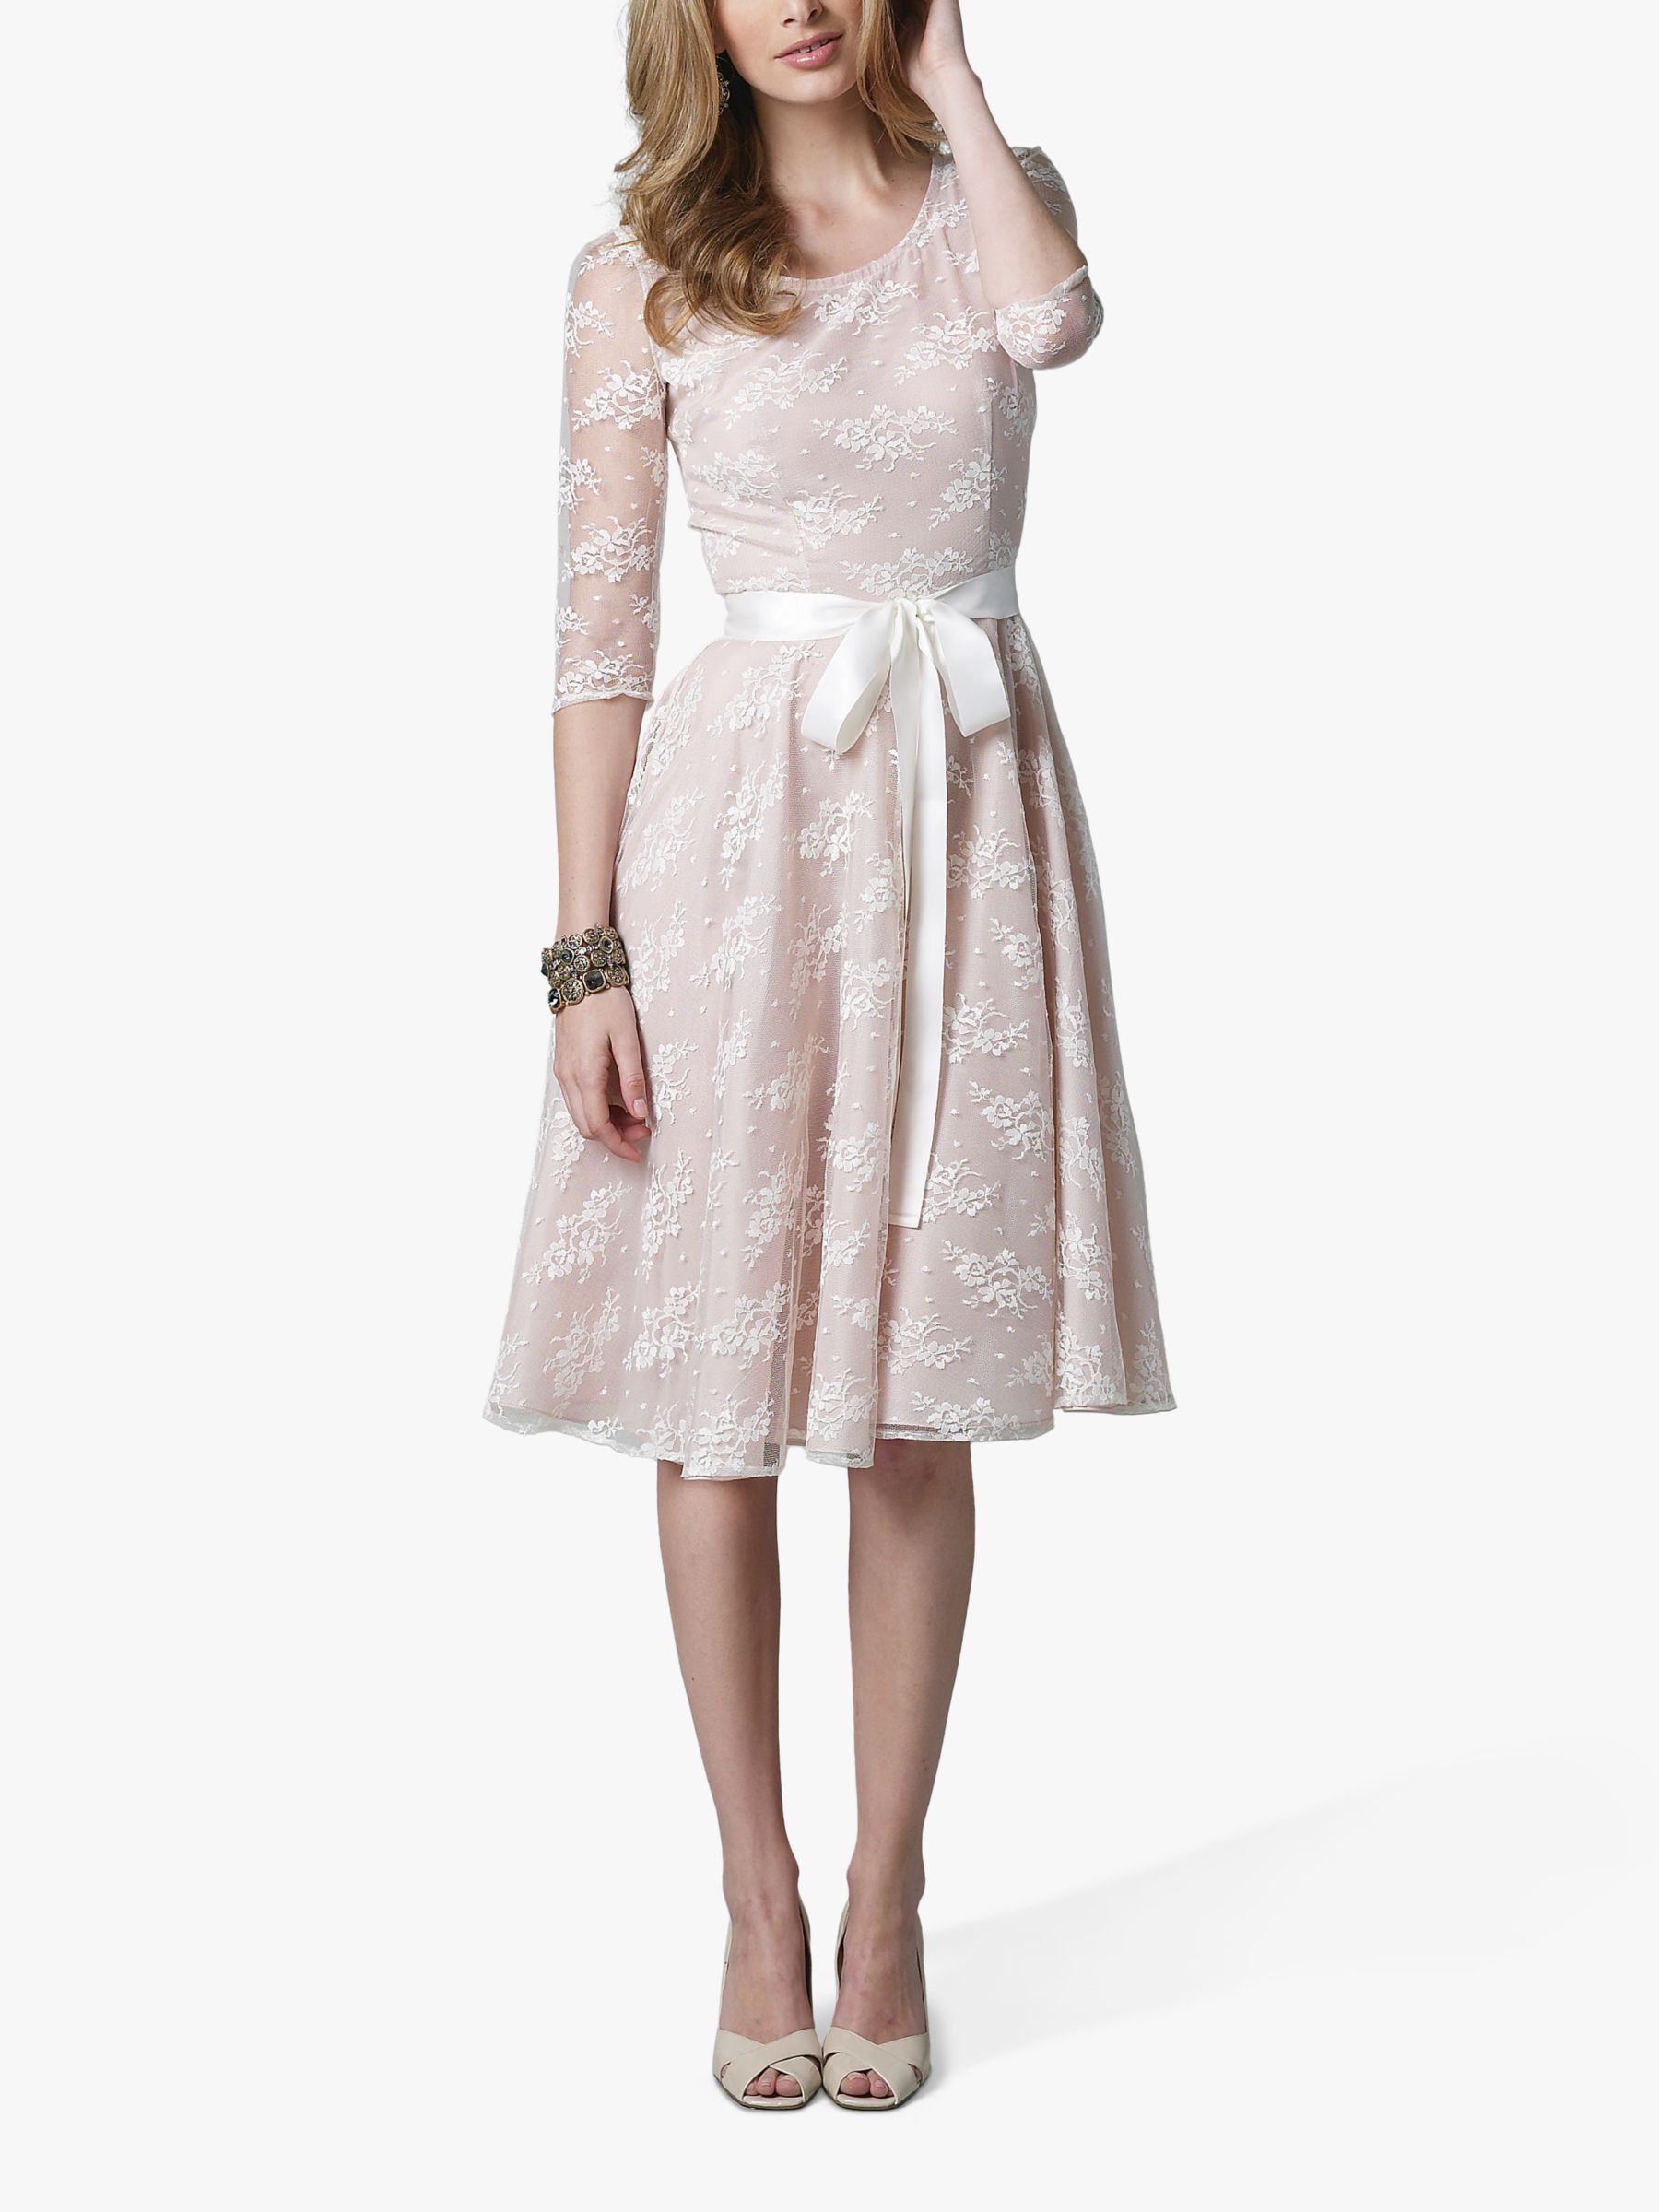 Vogue Misses' Petite Dress Sewing Pattern, V8766